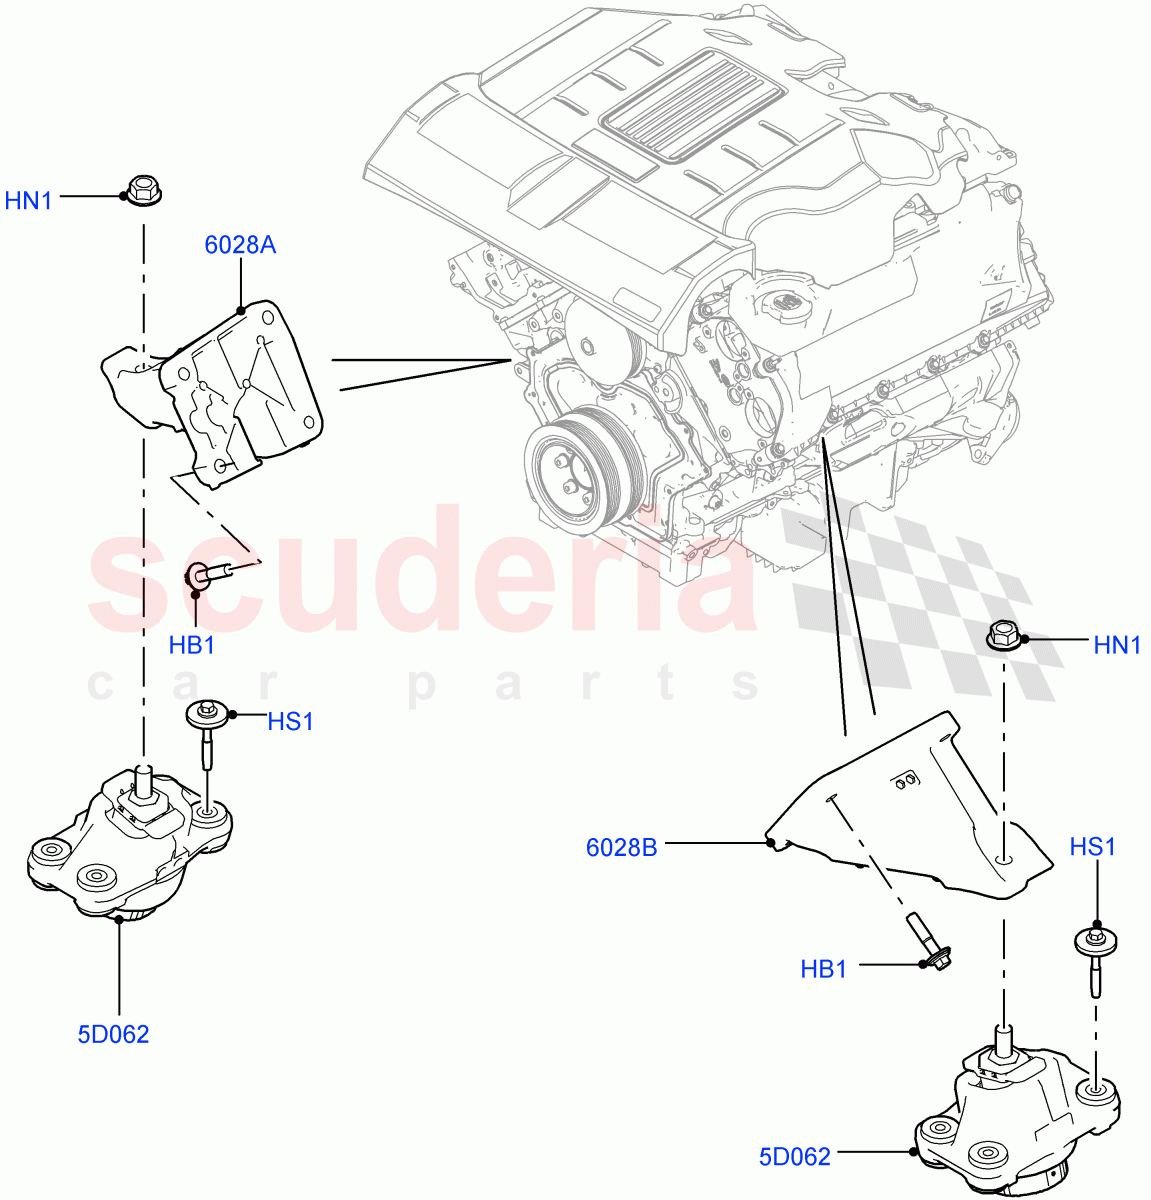 Engine Mounting(3.0L DOHC GDI SC V6 PETROL,5.0L OHC SGDI SC V8 Petrol - AJ133,5.0 Petrol AJ133 DOHC CDA,5.0L P AJ133 DOHC CDA S/C Enhanced) of Land Rover Land Rover Range Rover Sport (2014+) [3.0 DOHC GDI SC V6 Petrol]